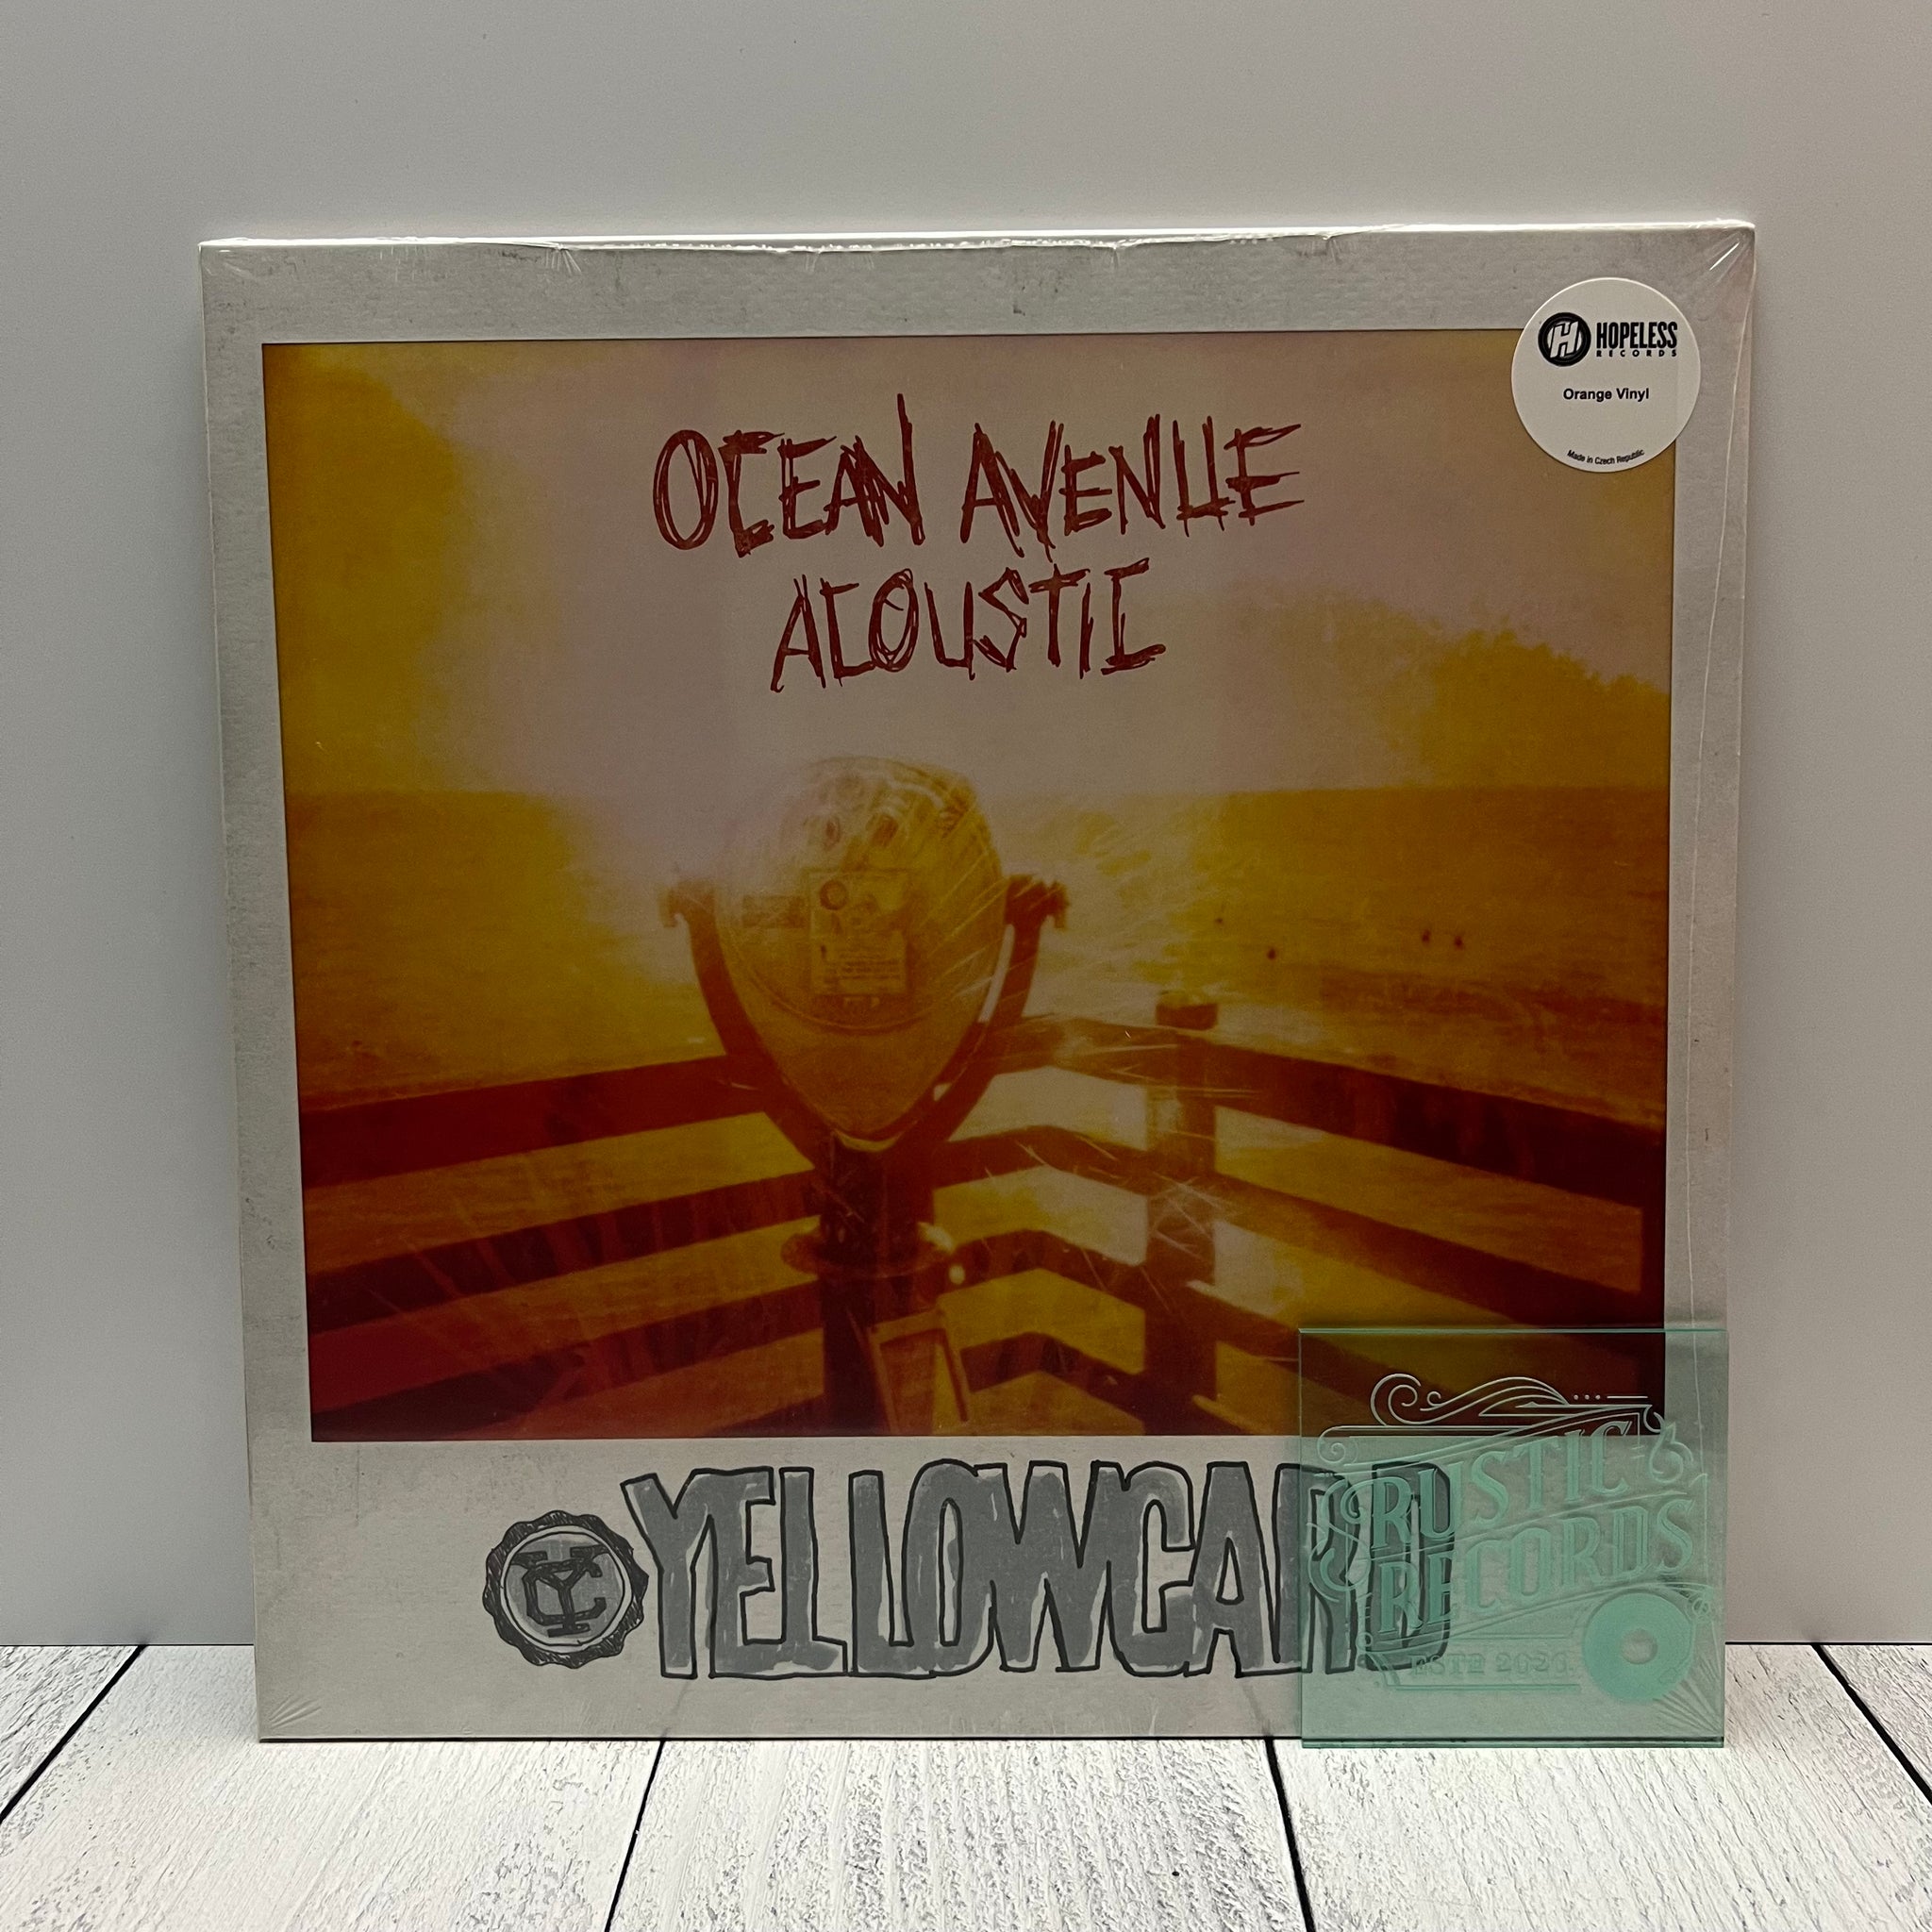 Yellowcard - Ocean Avenue Acoustic (Orange Vinyl) (LIMIT 1 PER CUSTOMER)